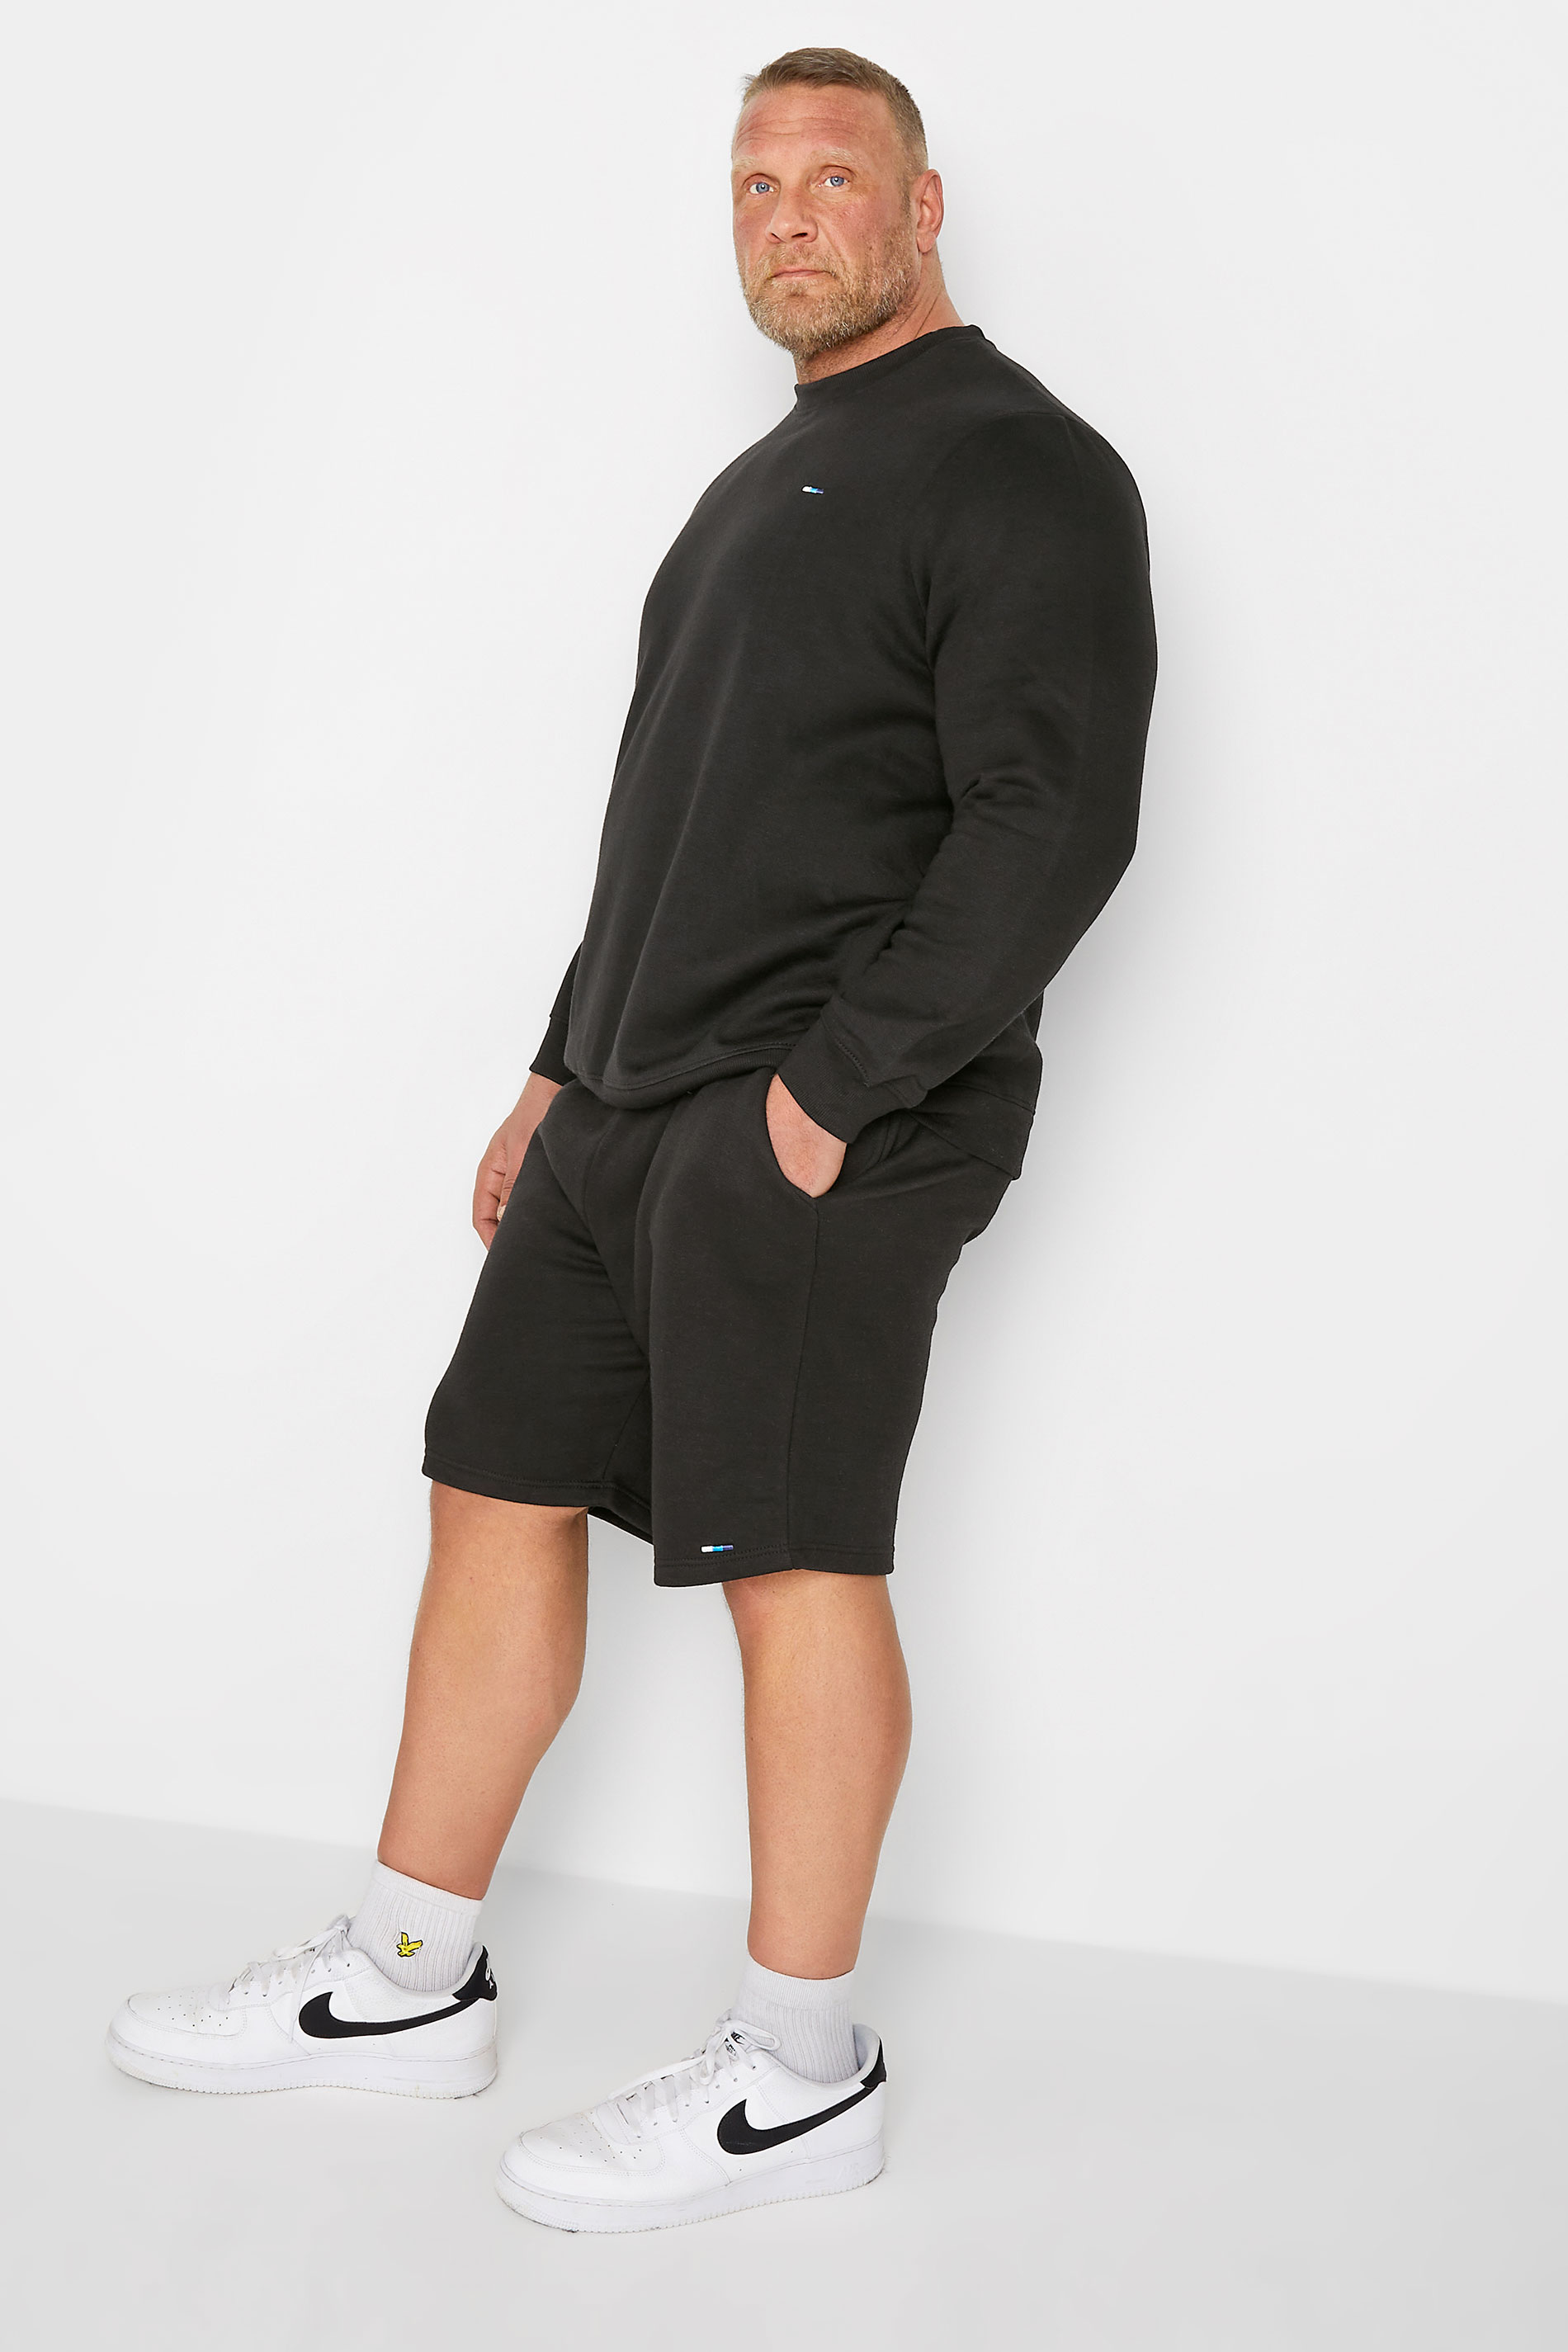 BadRhino Black Essential Sweatshirt | BadRhino 2